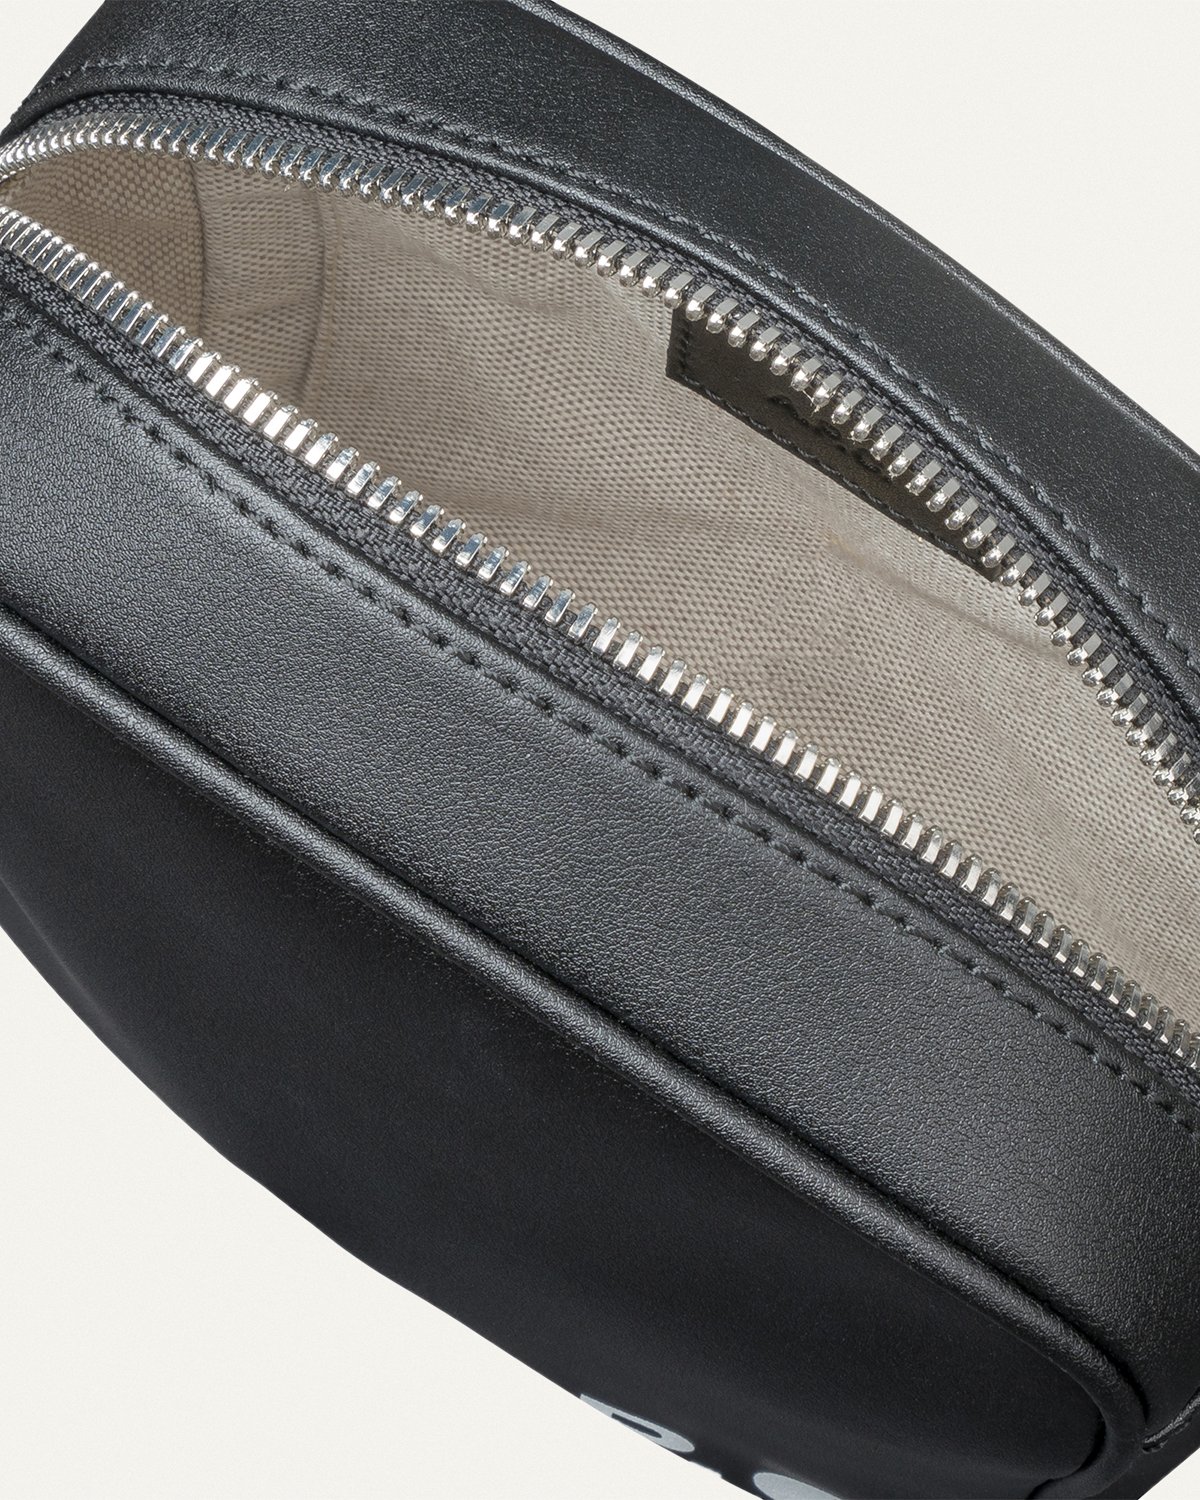 A.P.C. x Carhartt WIP - Nedi Shoulder Bag - Accessories - Black - Image 3